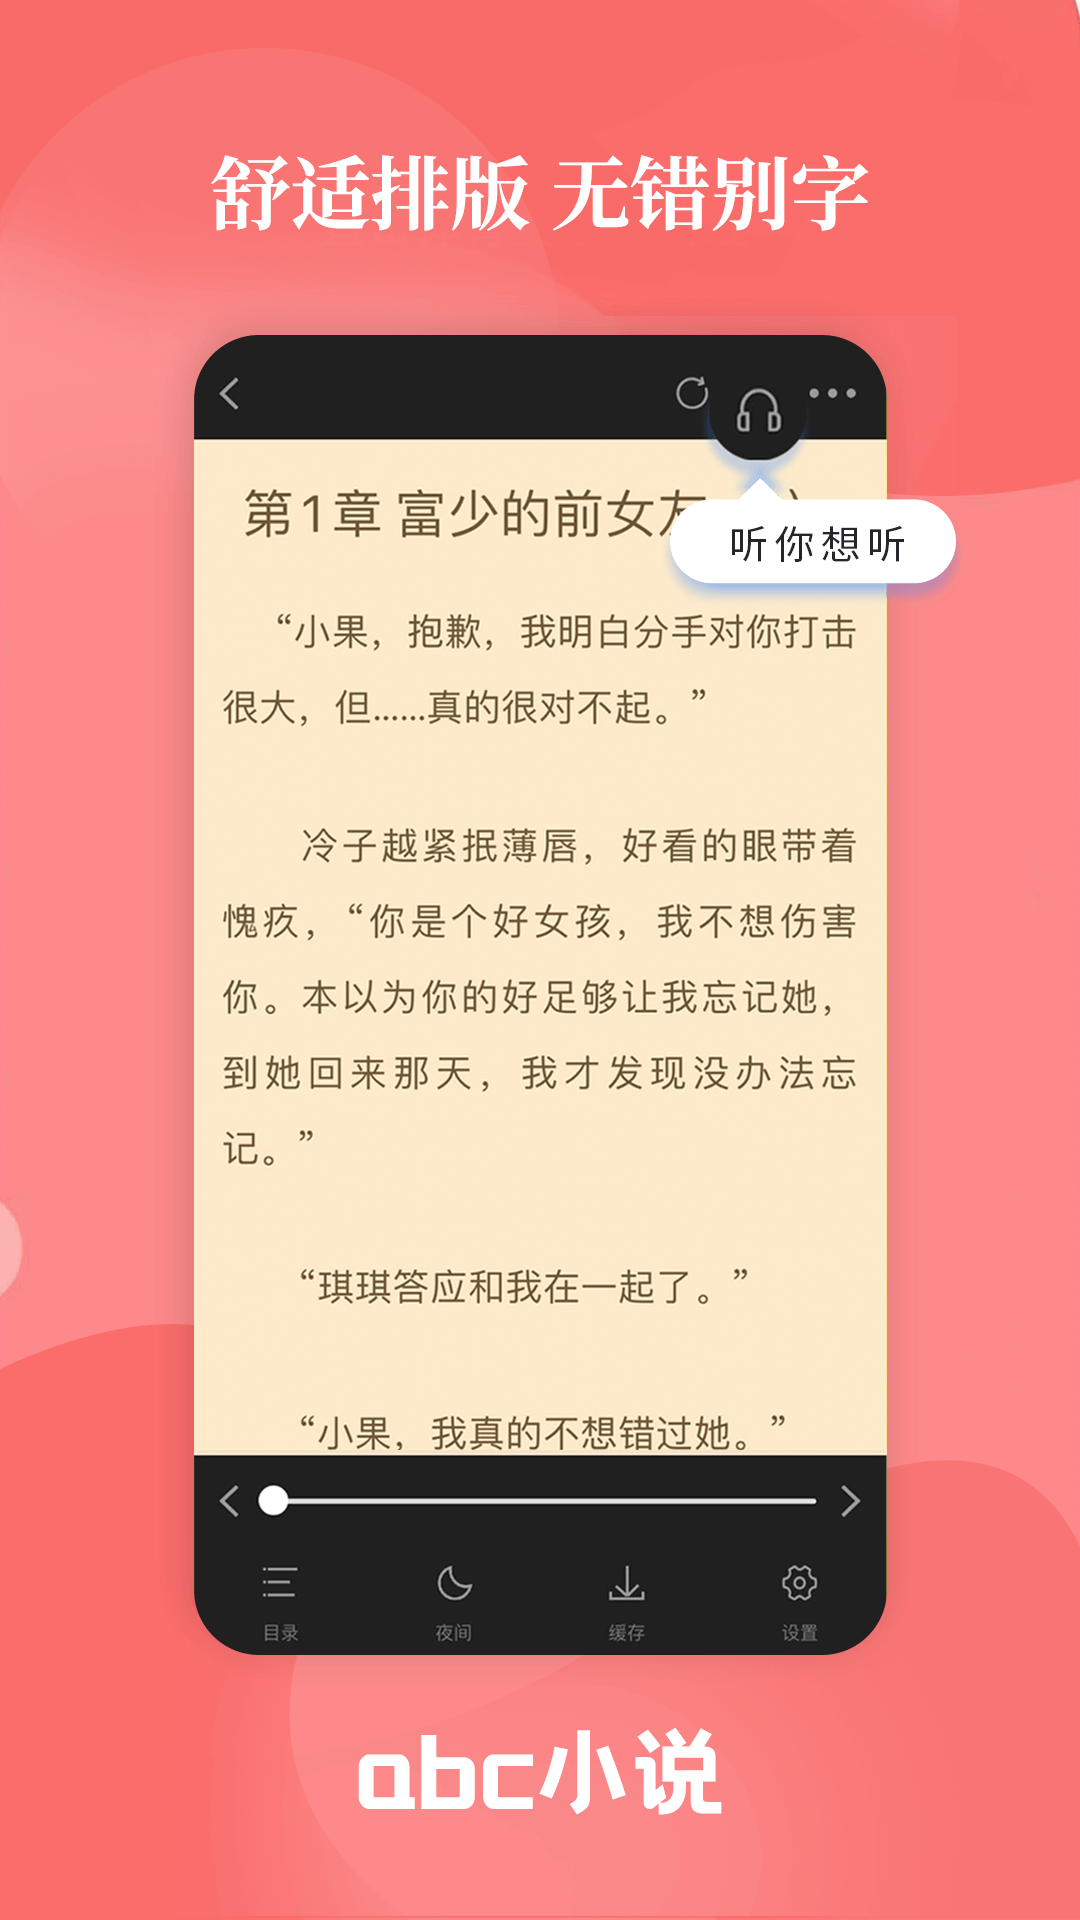 abc小说app正式版截图(3)